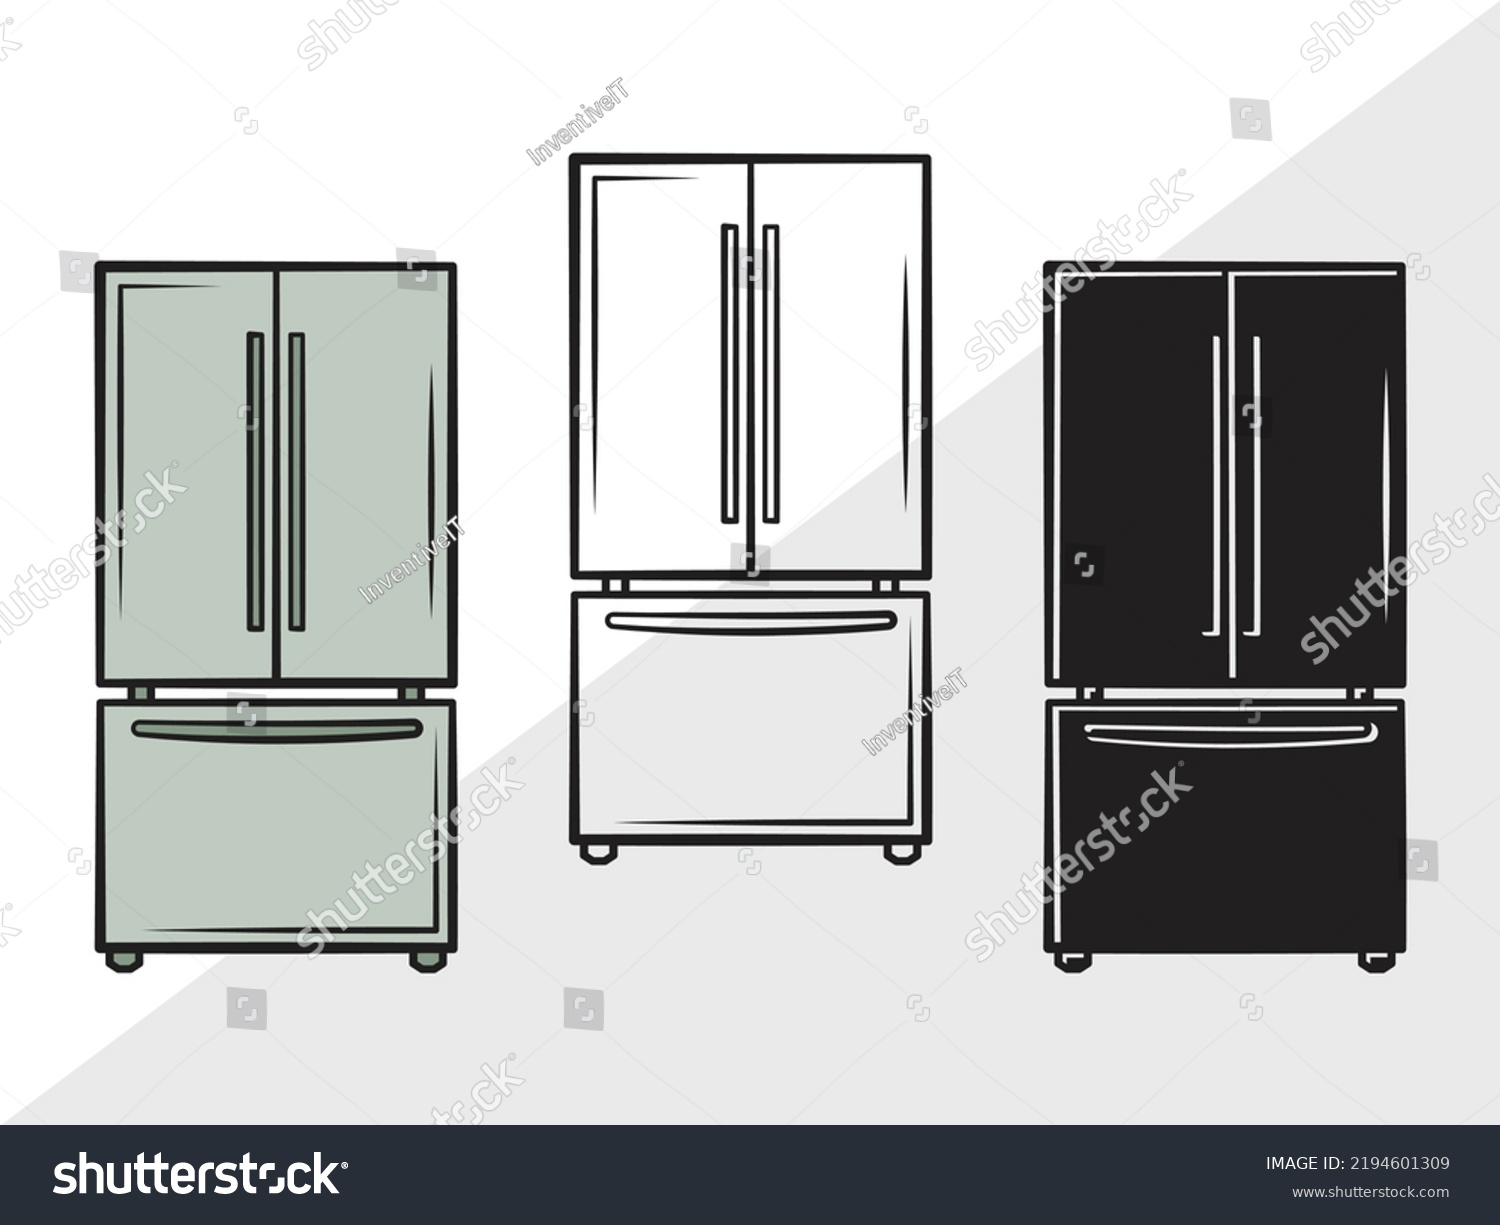 SVG of Refrigerator Monogram SVG Printable Vector Illustration svg